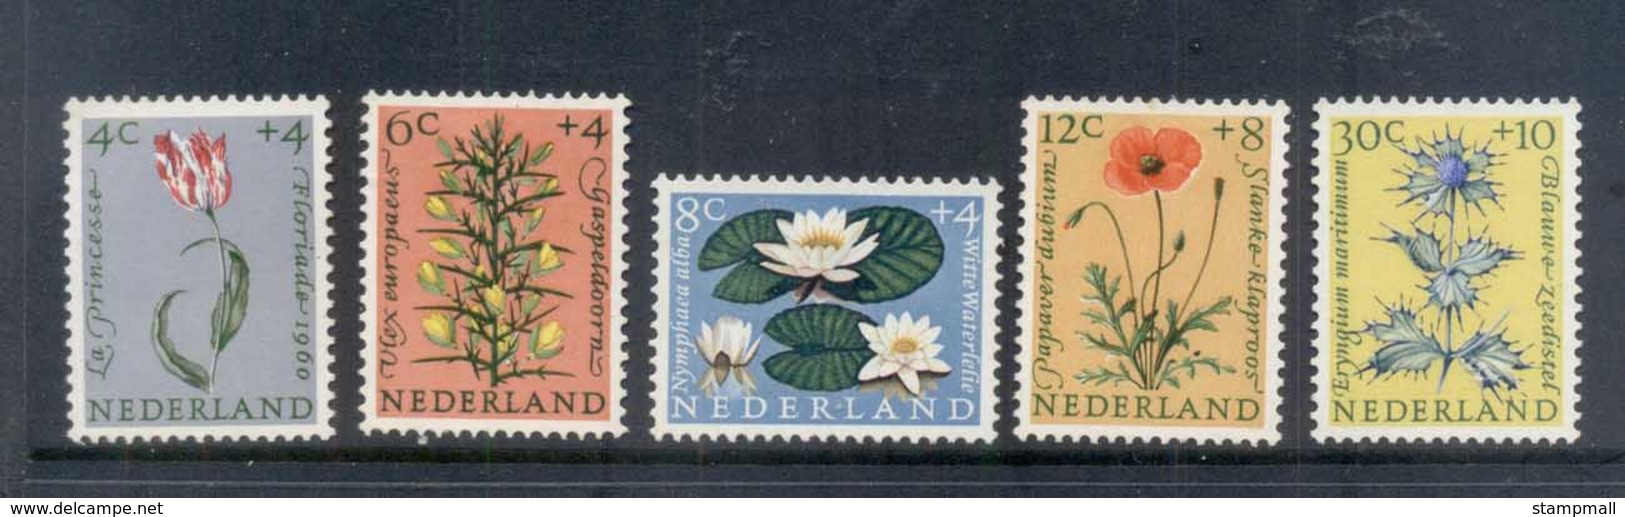 Netherlands 1960 Welfare, Flowers MLH - Unclassified